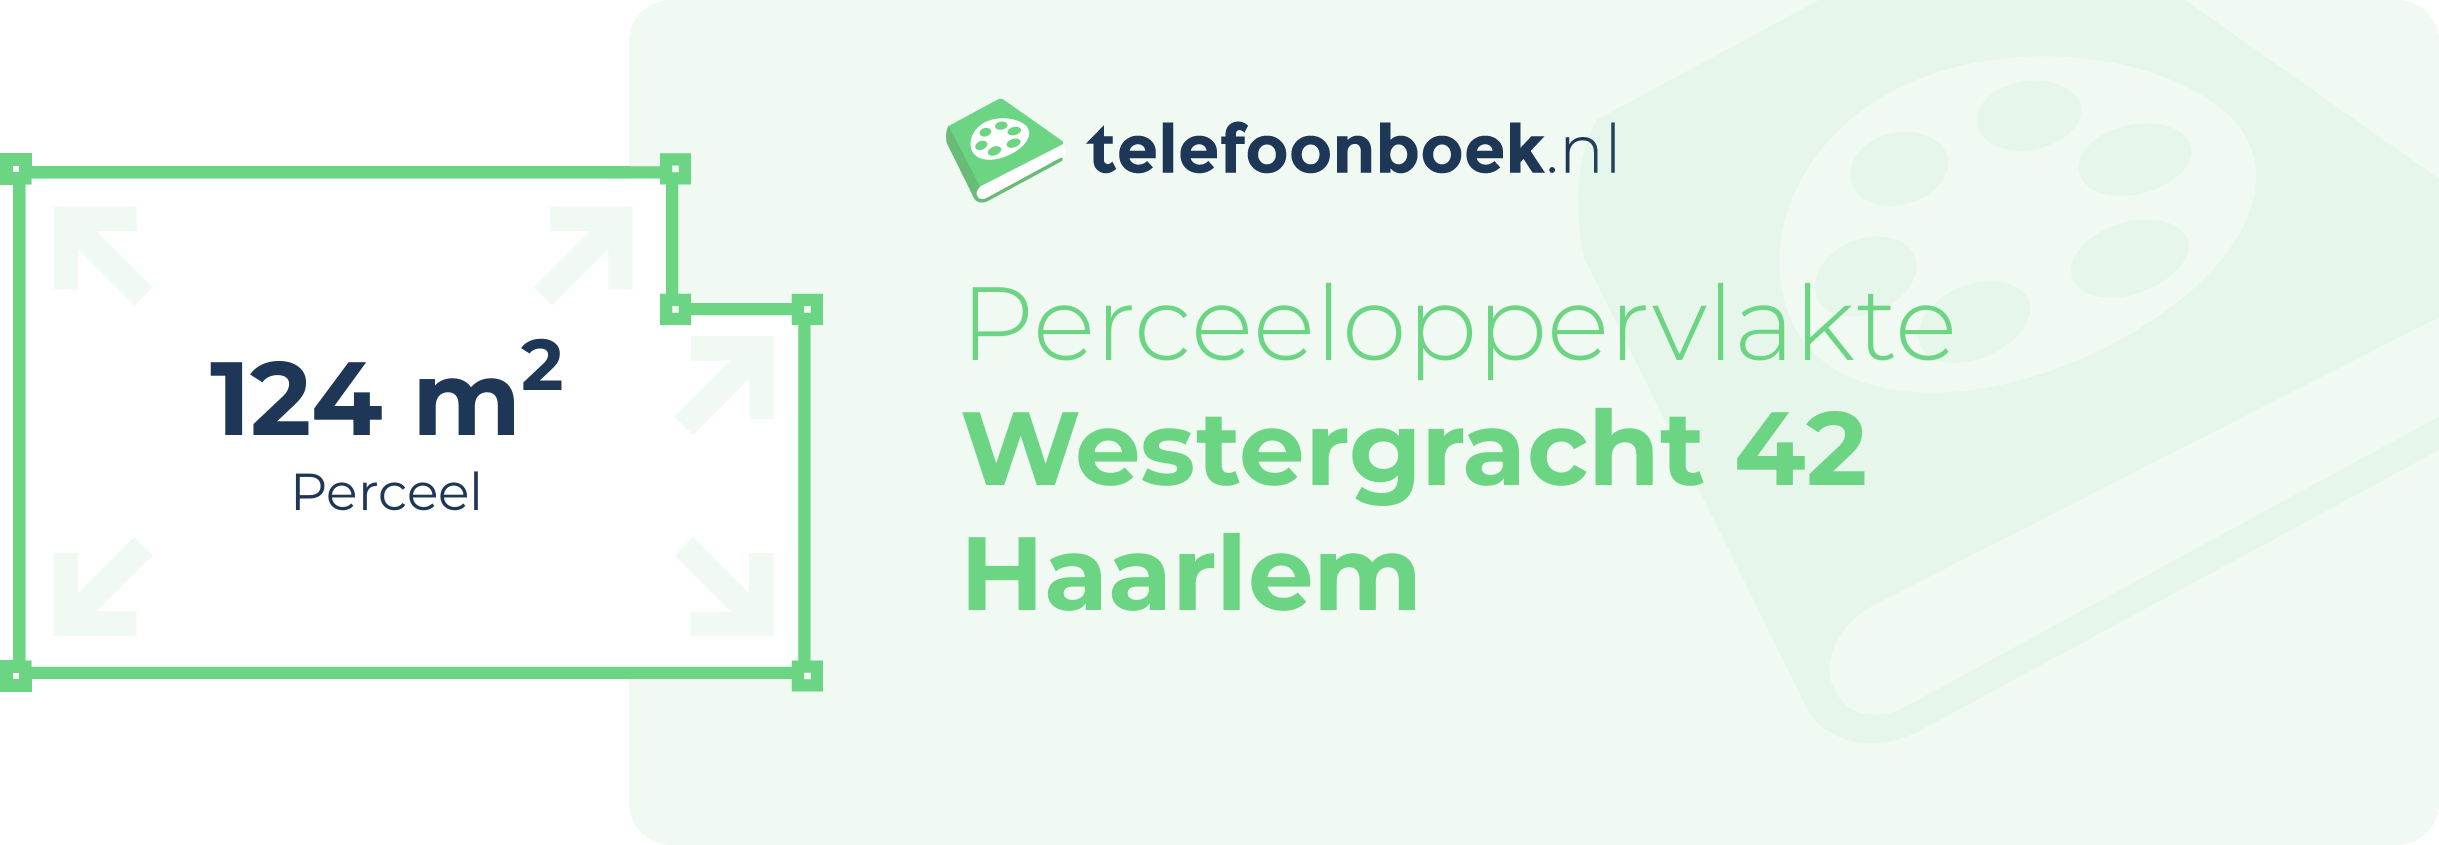 Perceeloppervlakte Westergracht 42 Haarlem